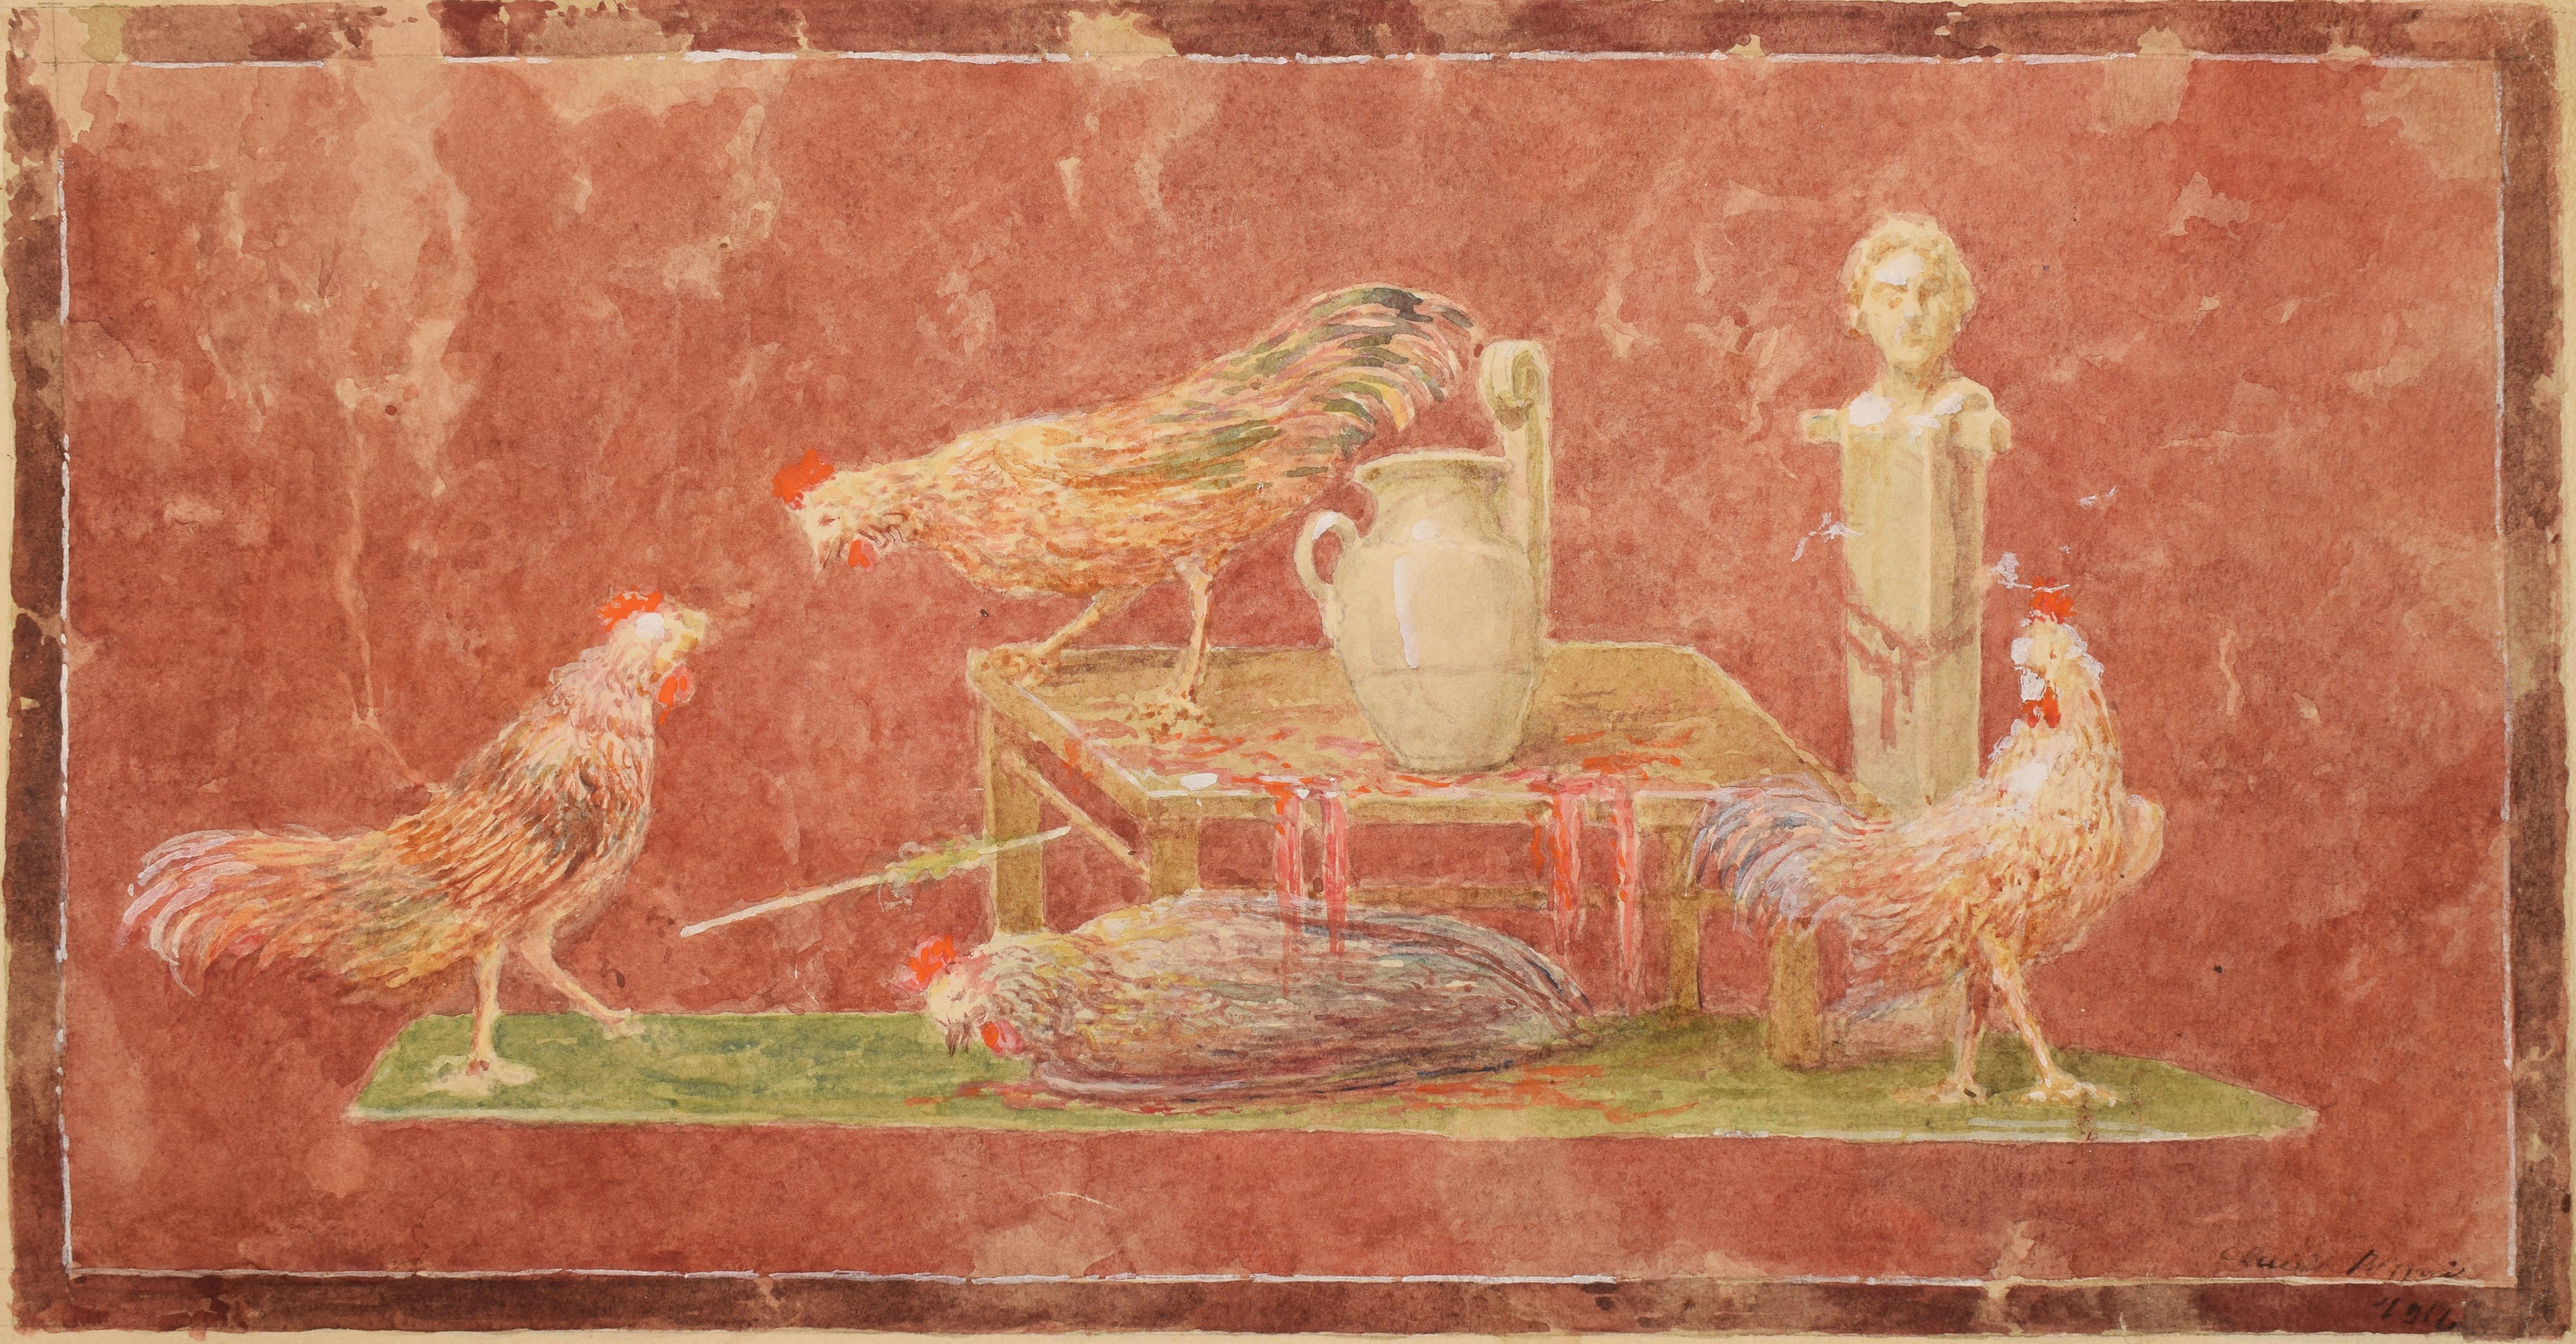 Luigi Bazzani Animal Art - Roman fresco with fountain, roosters and herma